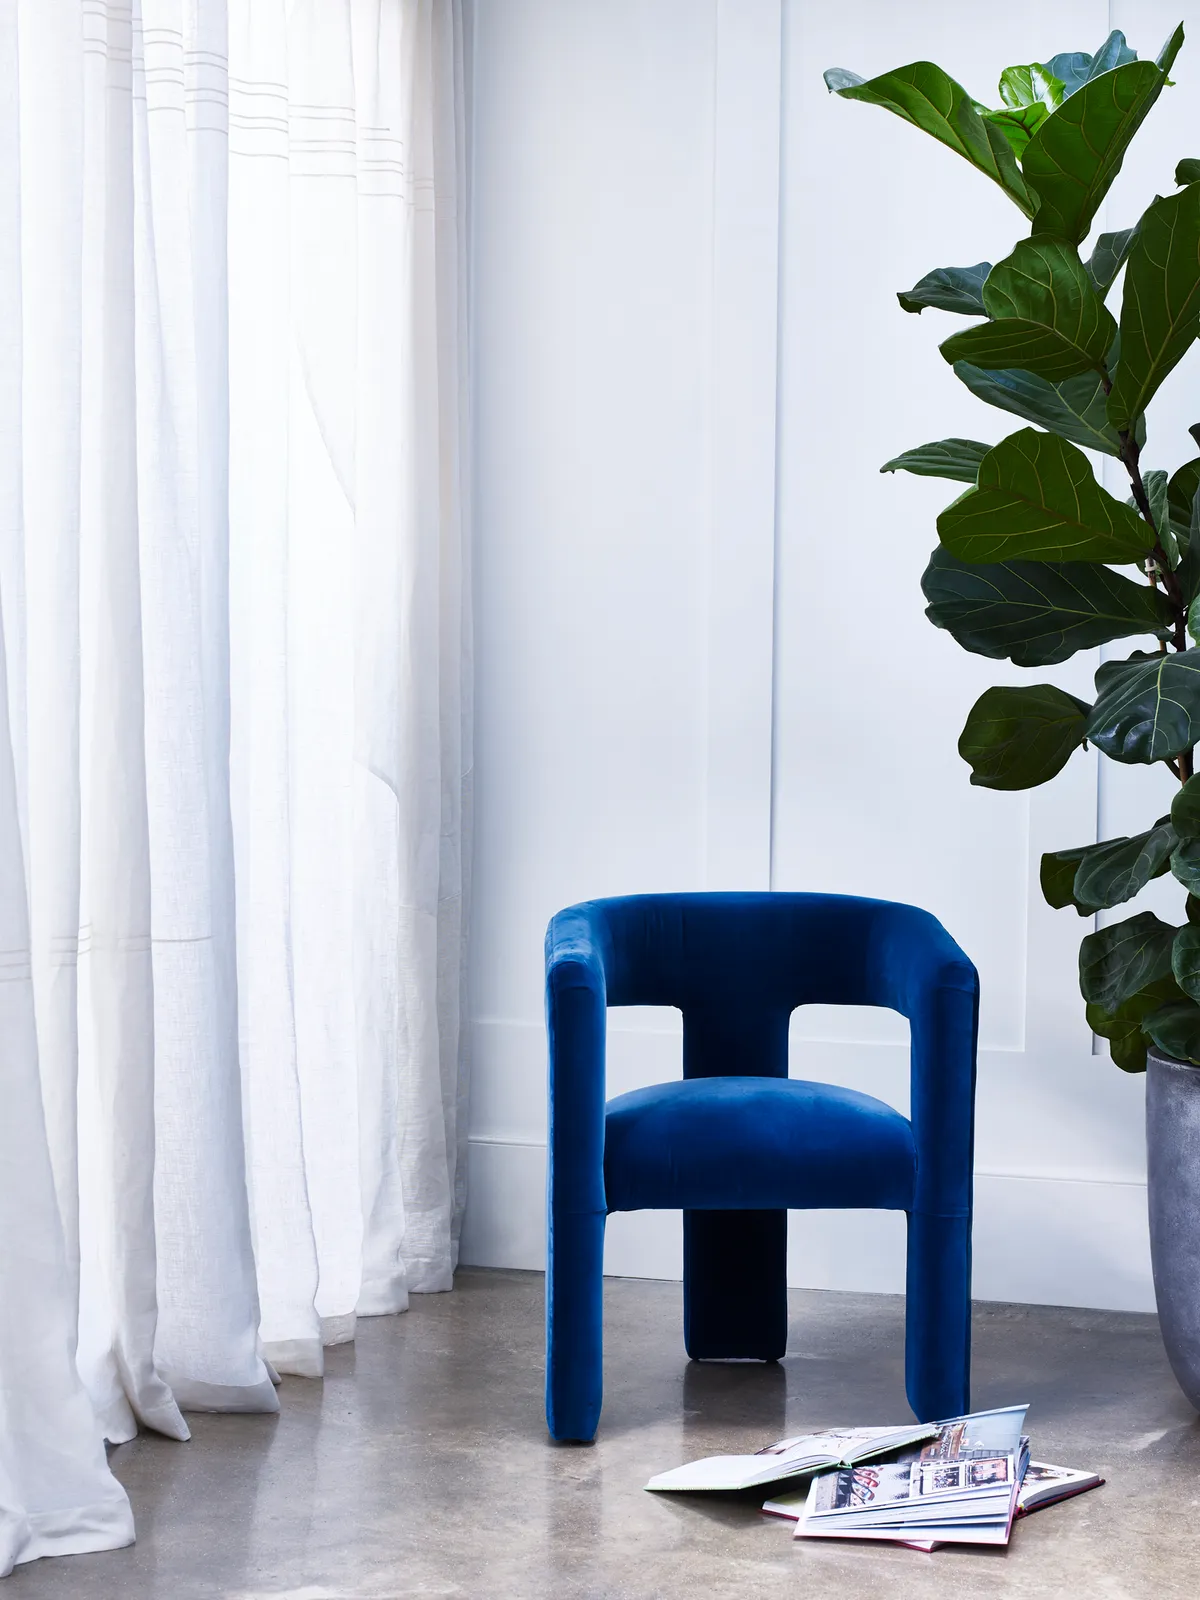 Statement cobalt furniture looks stunning against fresh white walls. Image by Oliver Bonas. 